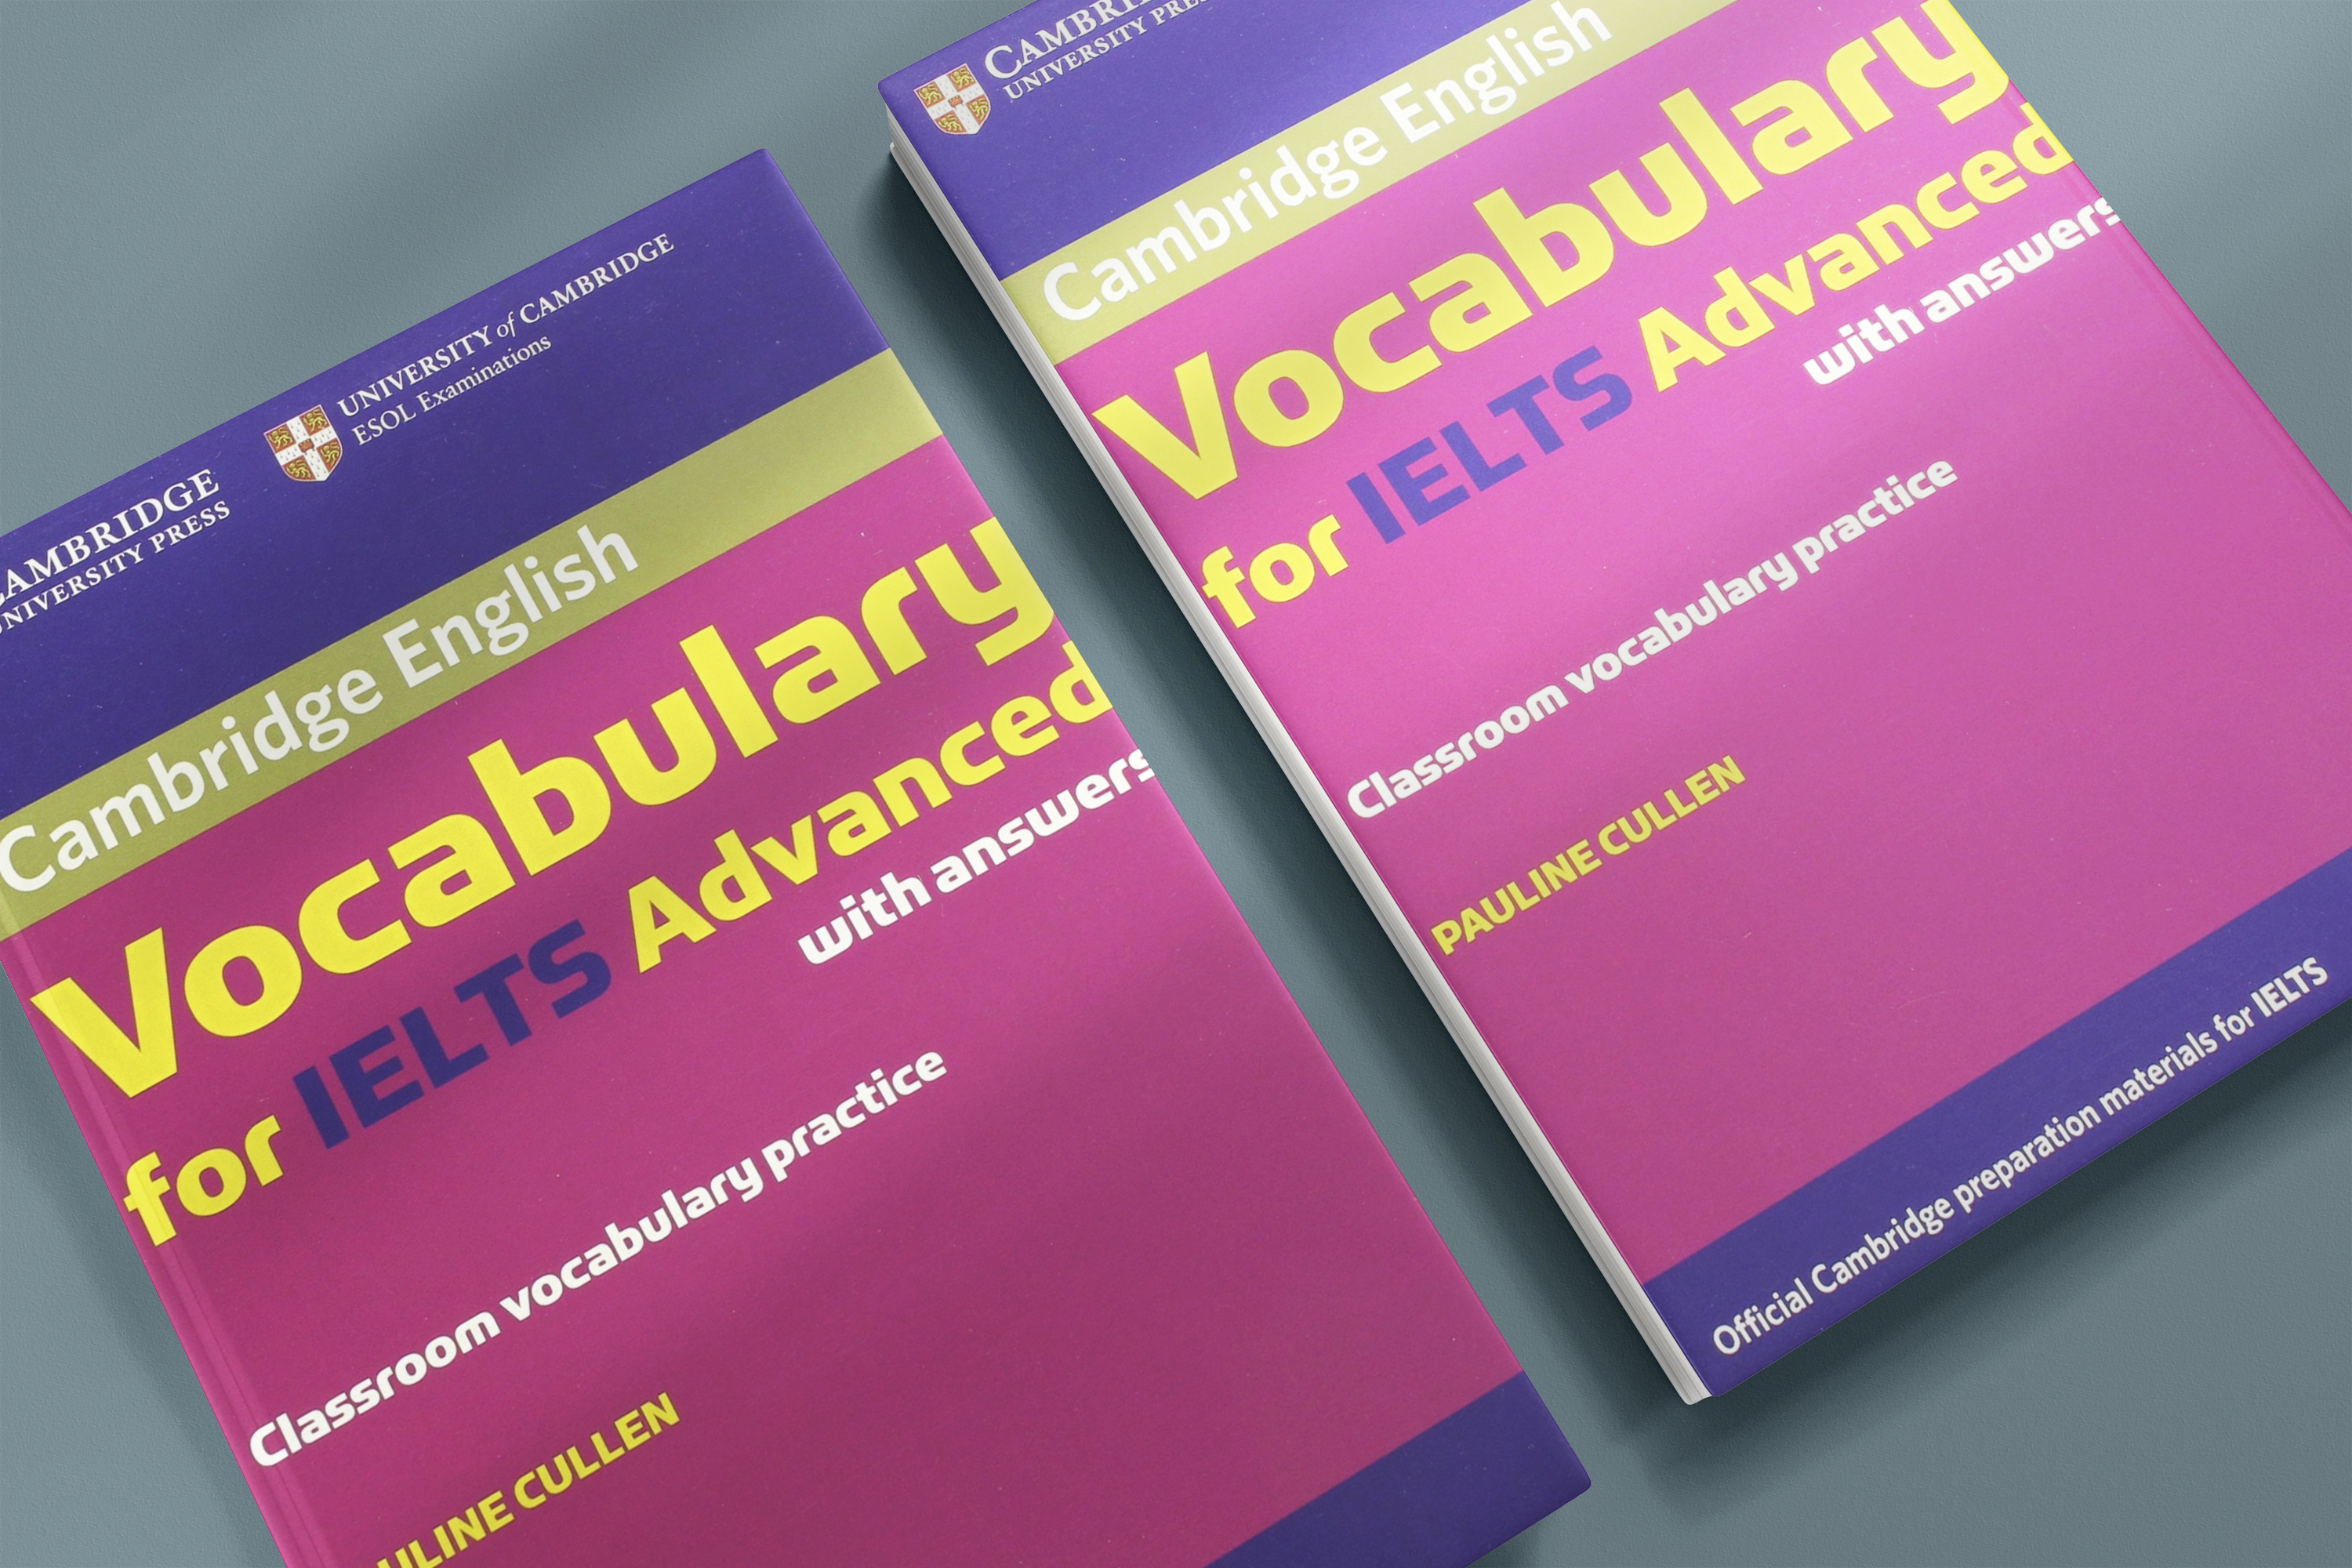 Cambridge Vocabulary For IELTS